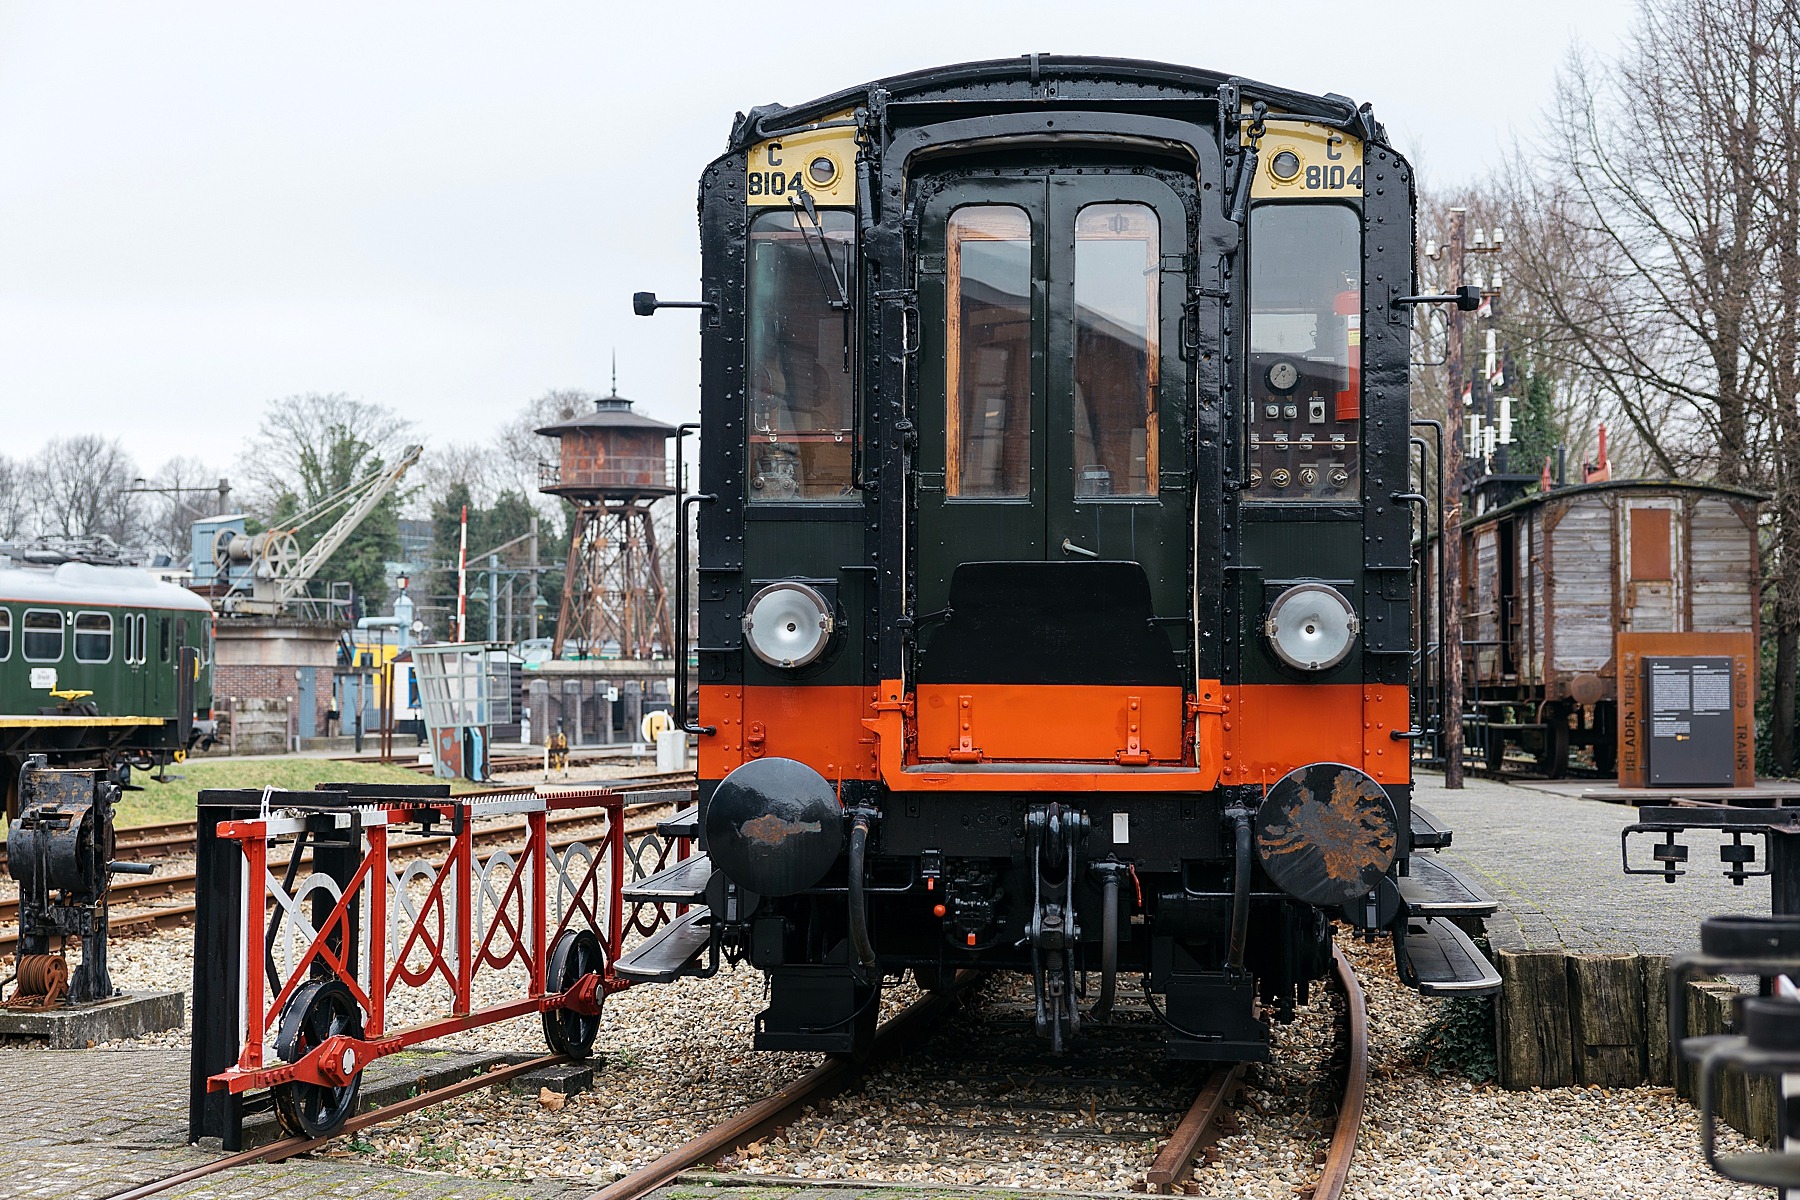 Spoorwegmuseum, l'incroyable musée du train de Utrecht 127